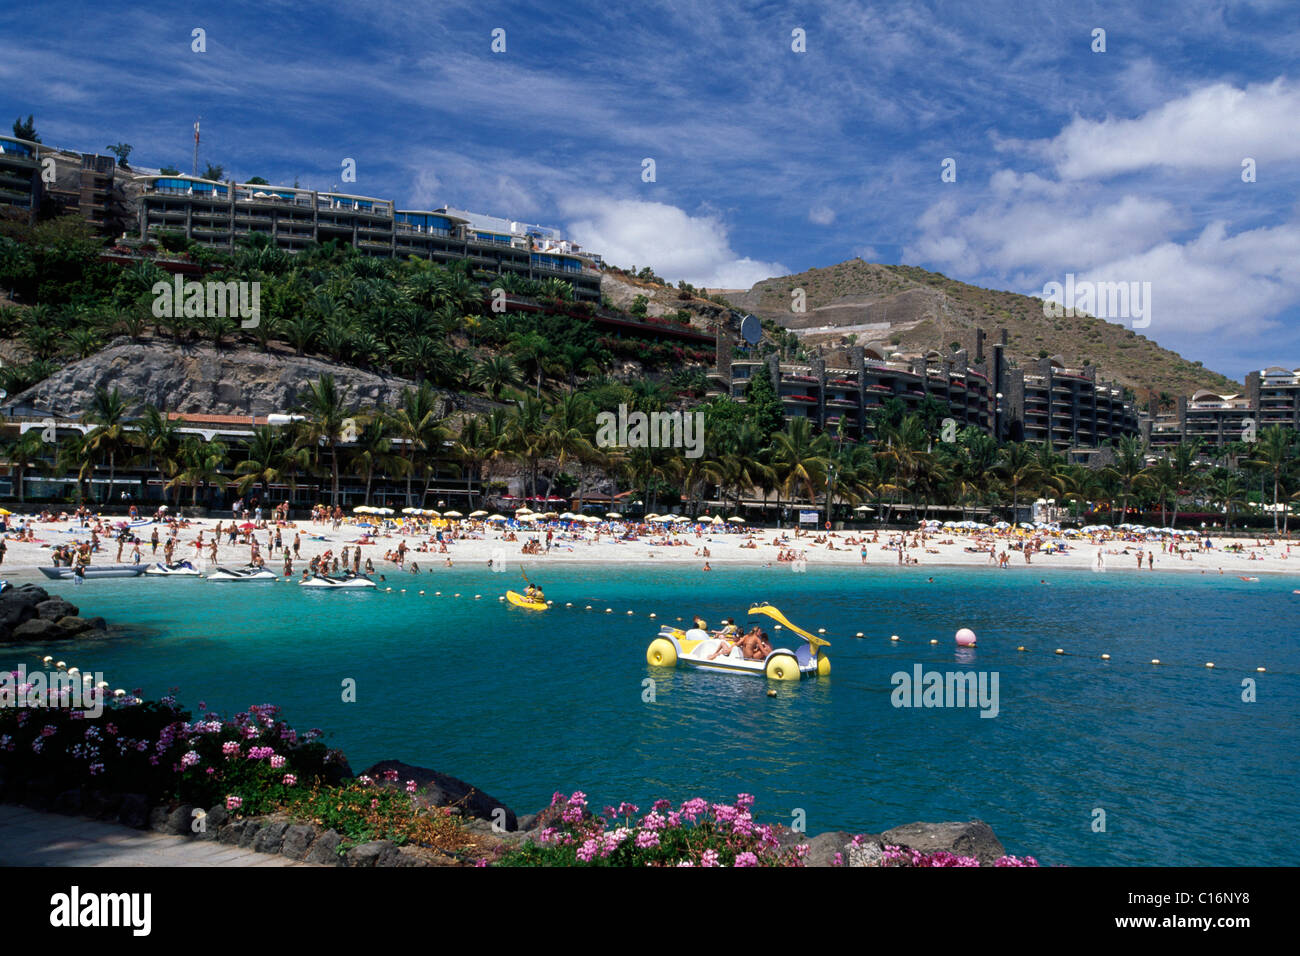 Anfi Beach, Arguineguin, Gran Canaria, Kanarische Inseln, Spanien, Europa  Stockfotografie - Alamy